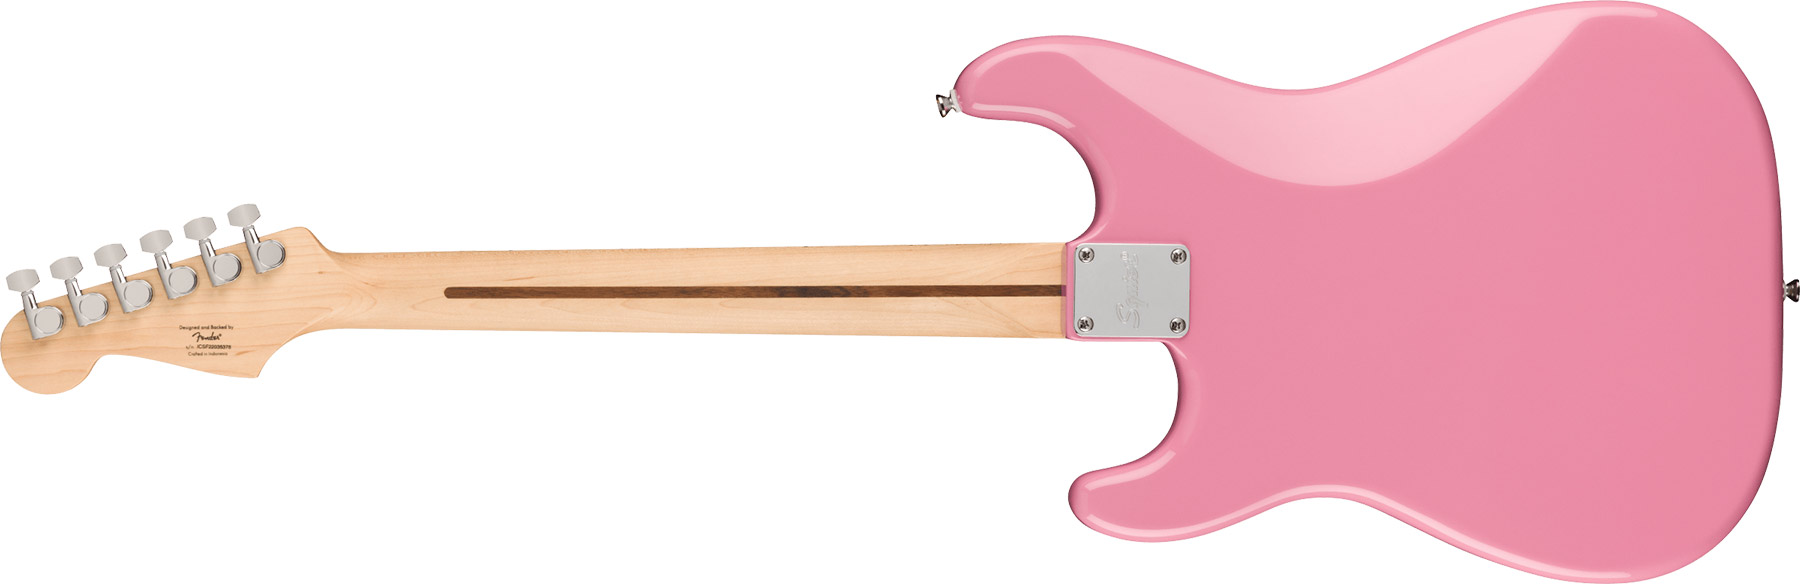 Squier Strat Sonic Hardtail H Ht Mn - Flash Pink - Str shape electric guitar - Variation 1